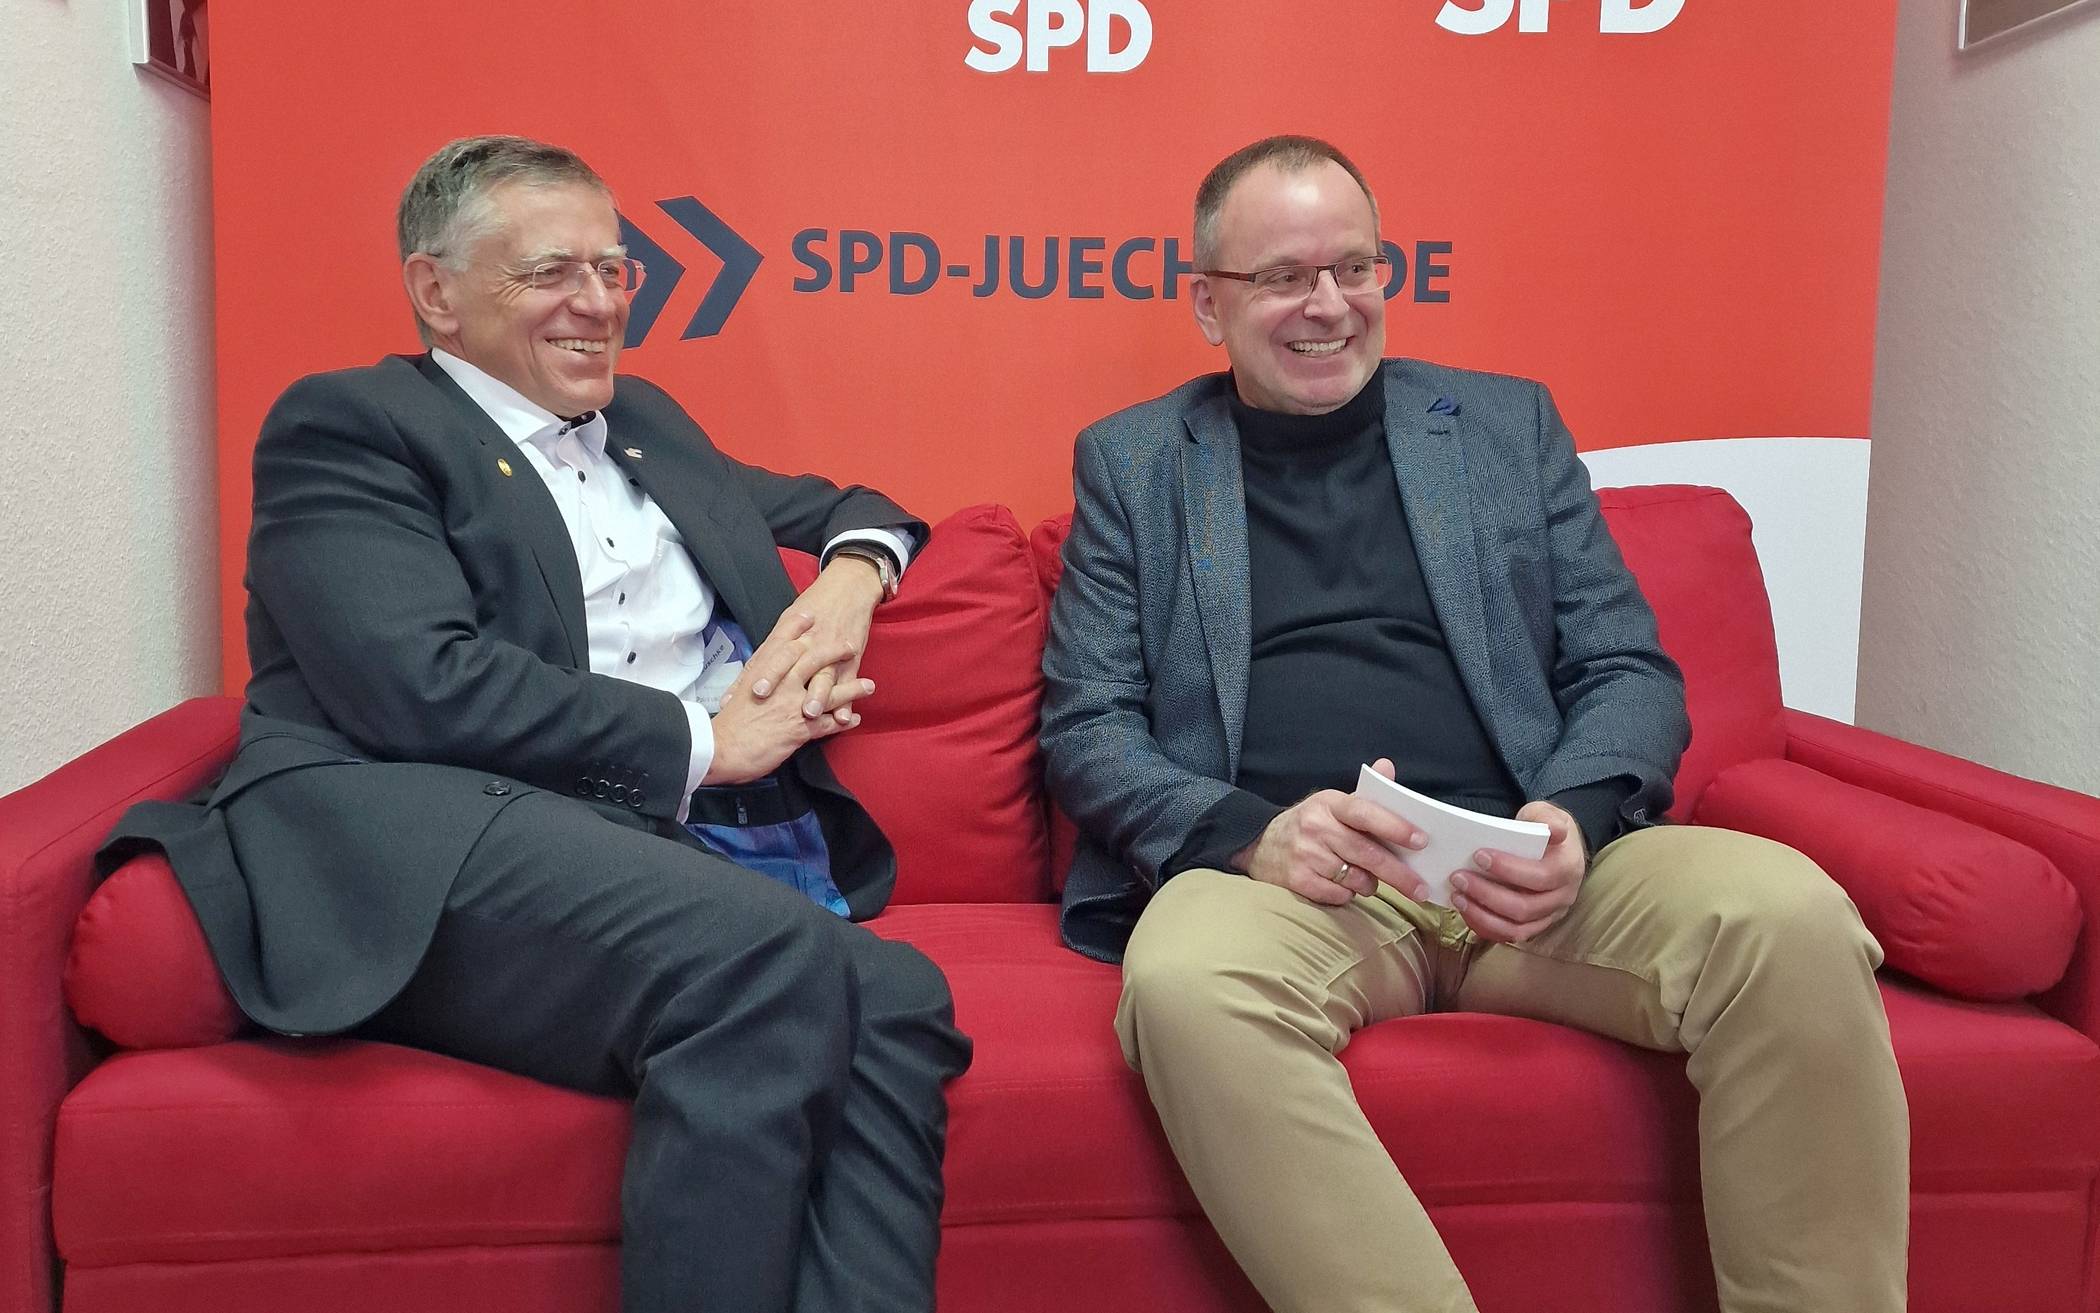 Landrat Hans-Jürgen Petrauschke (links) mit dem SPD-Ortsvereinsvorsitzenden Norbert John auf dem „Roten Sofa“.     